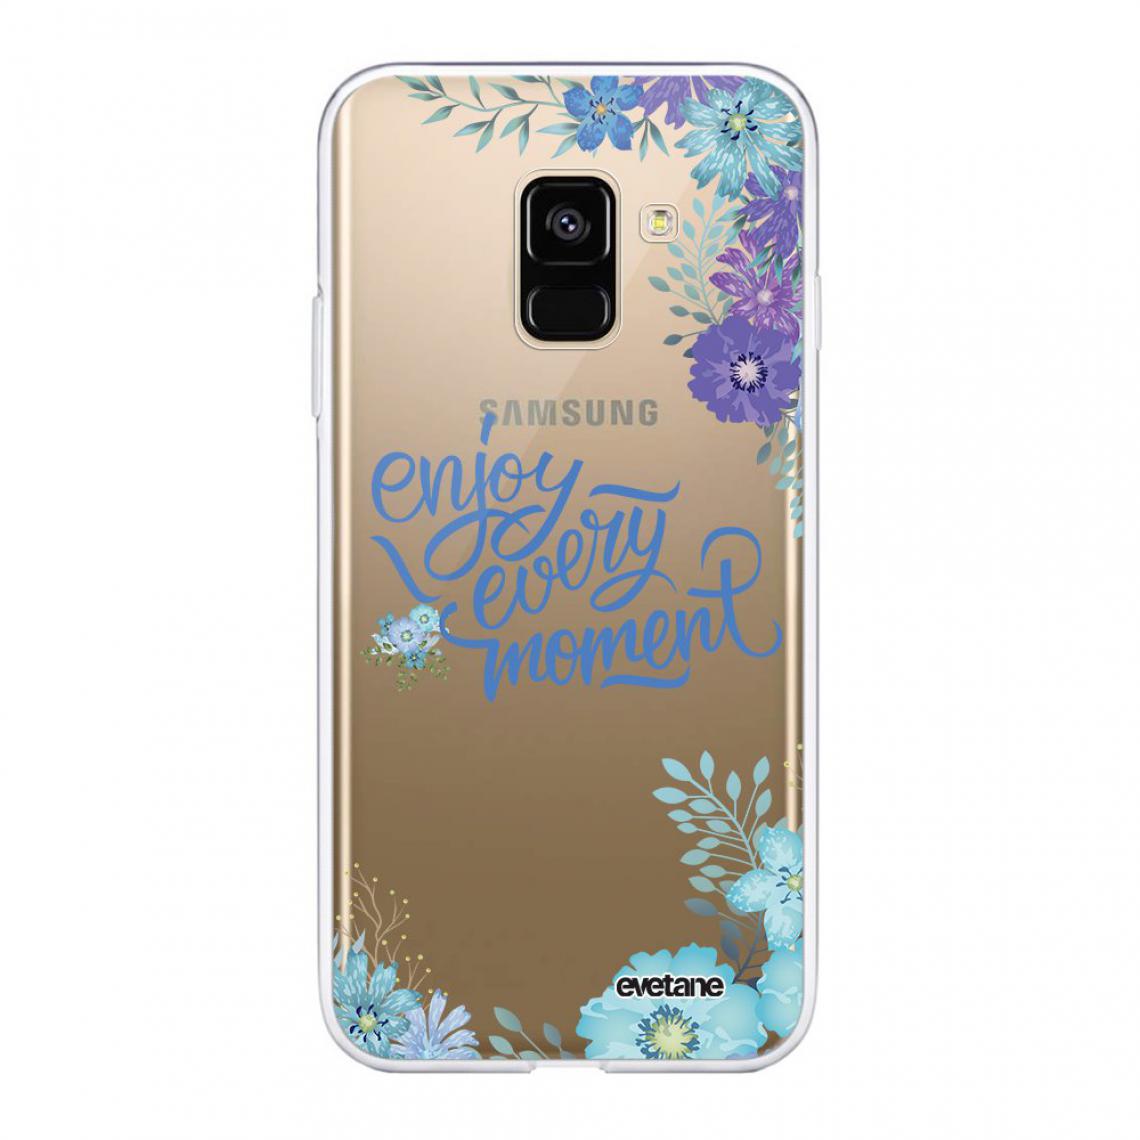 Evetane - Coque Samsung Galaxy A8 2018 360 intégrale avant arrière - Coque, étui smartphone